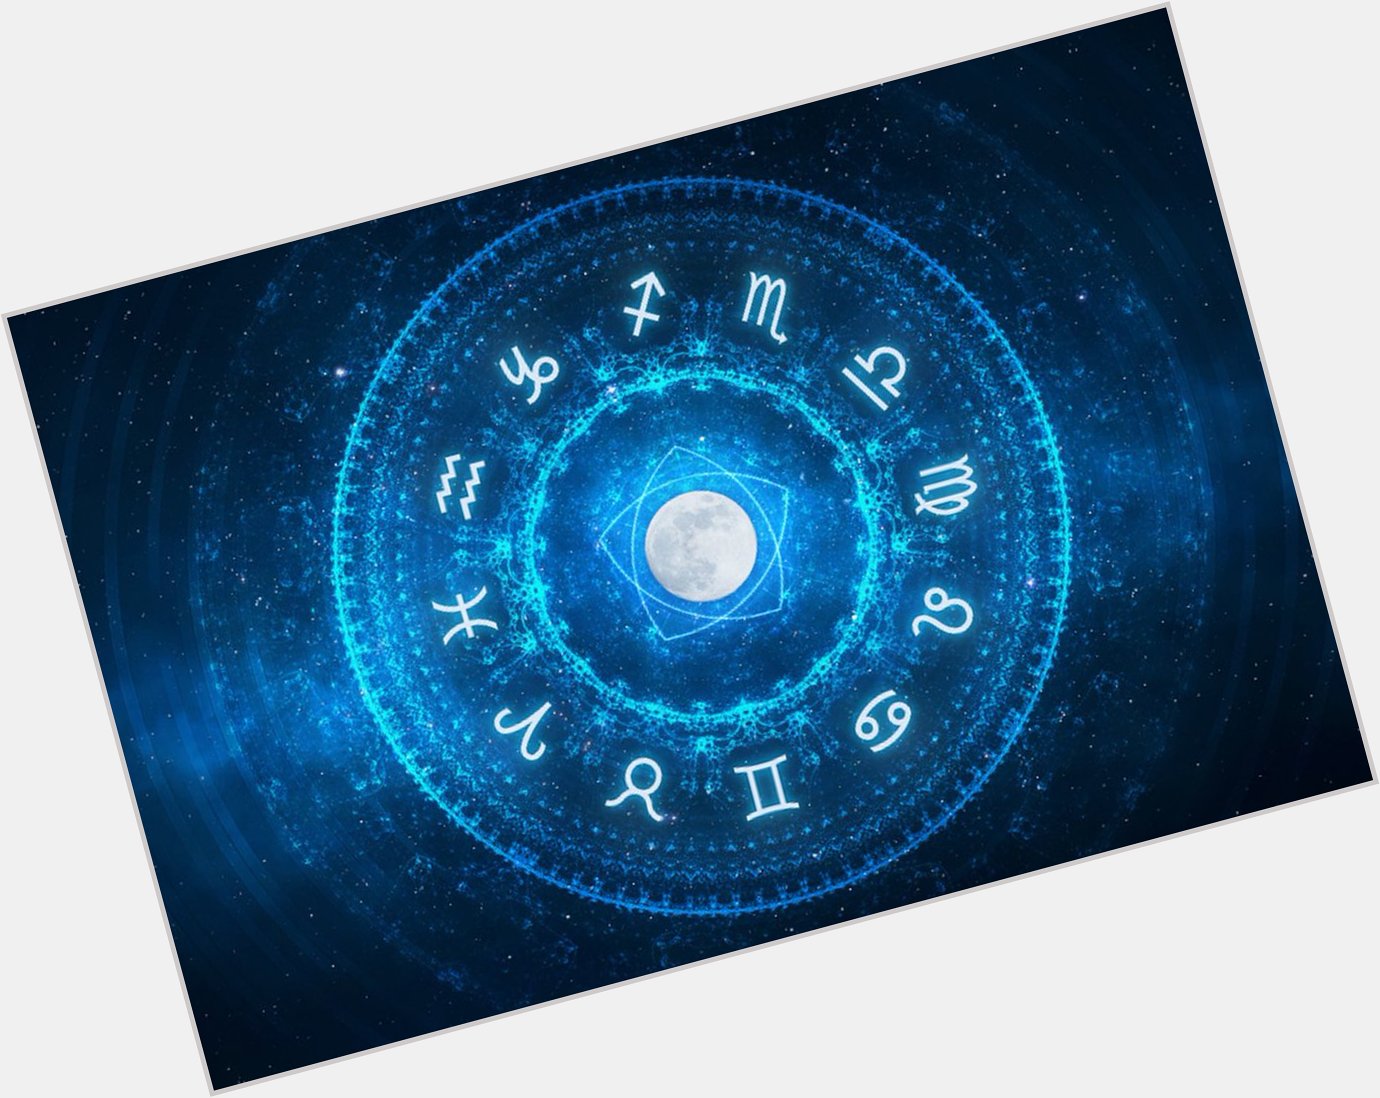 Horoscope for Feb. 7, 2020: Happy birthday Chris Rock; Aquarius, inventive ideas blossom  